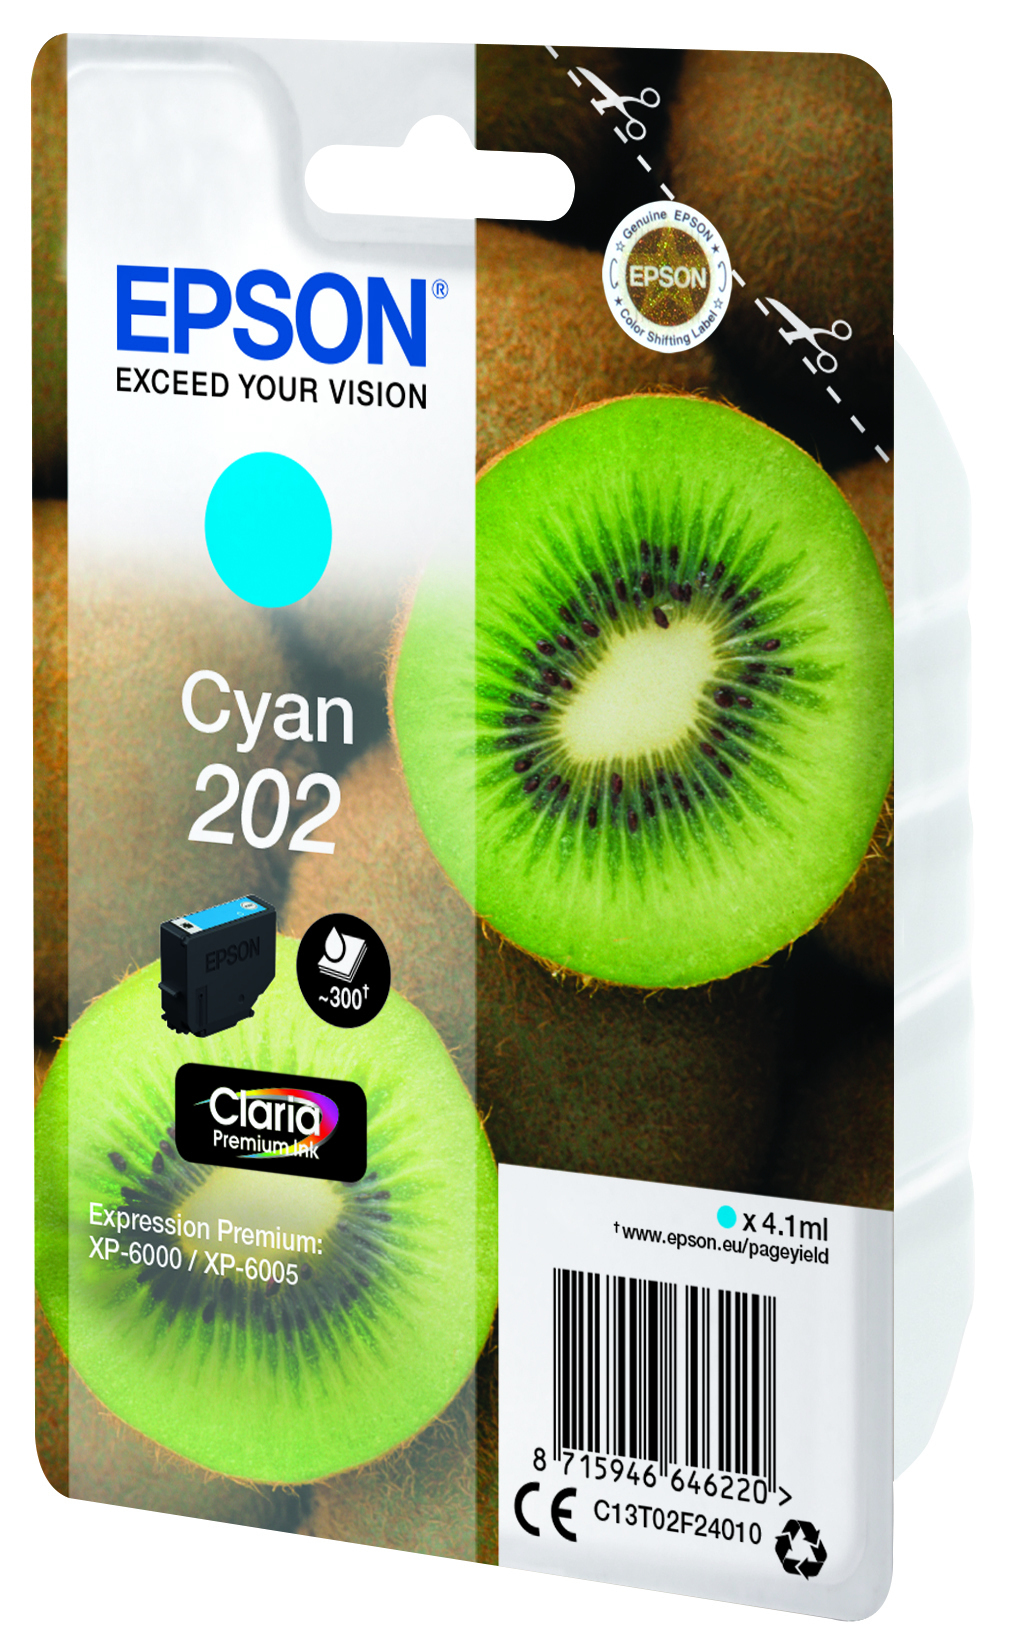 Epson Kiwi Singlepack Cyan 202 Claria Premium Ink - Standardertrag - 4,1 ml - 300 Seiten - 1 Stück(e)